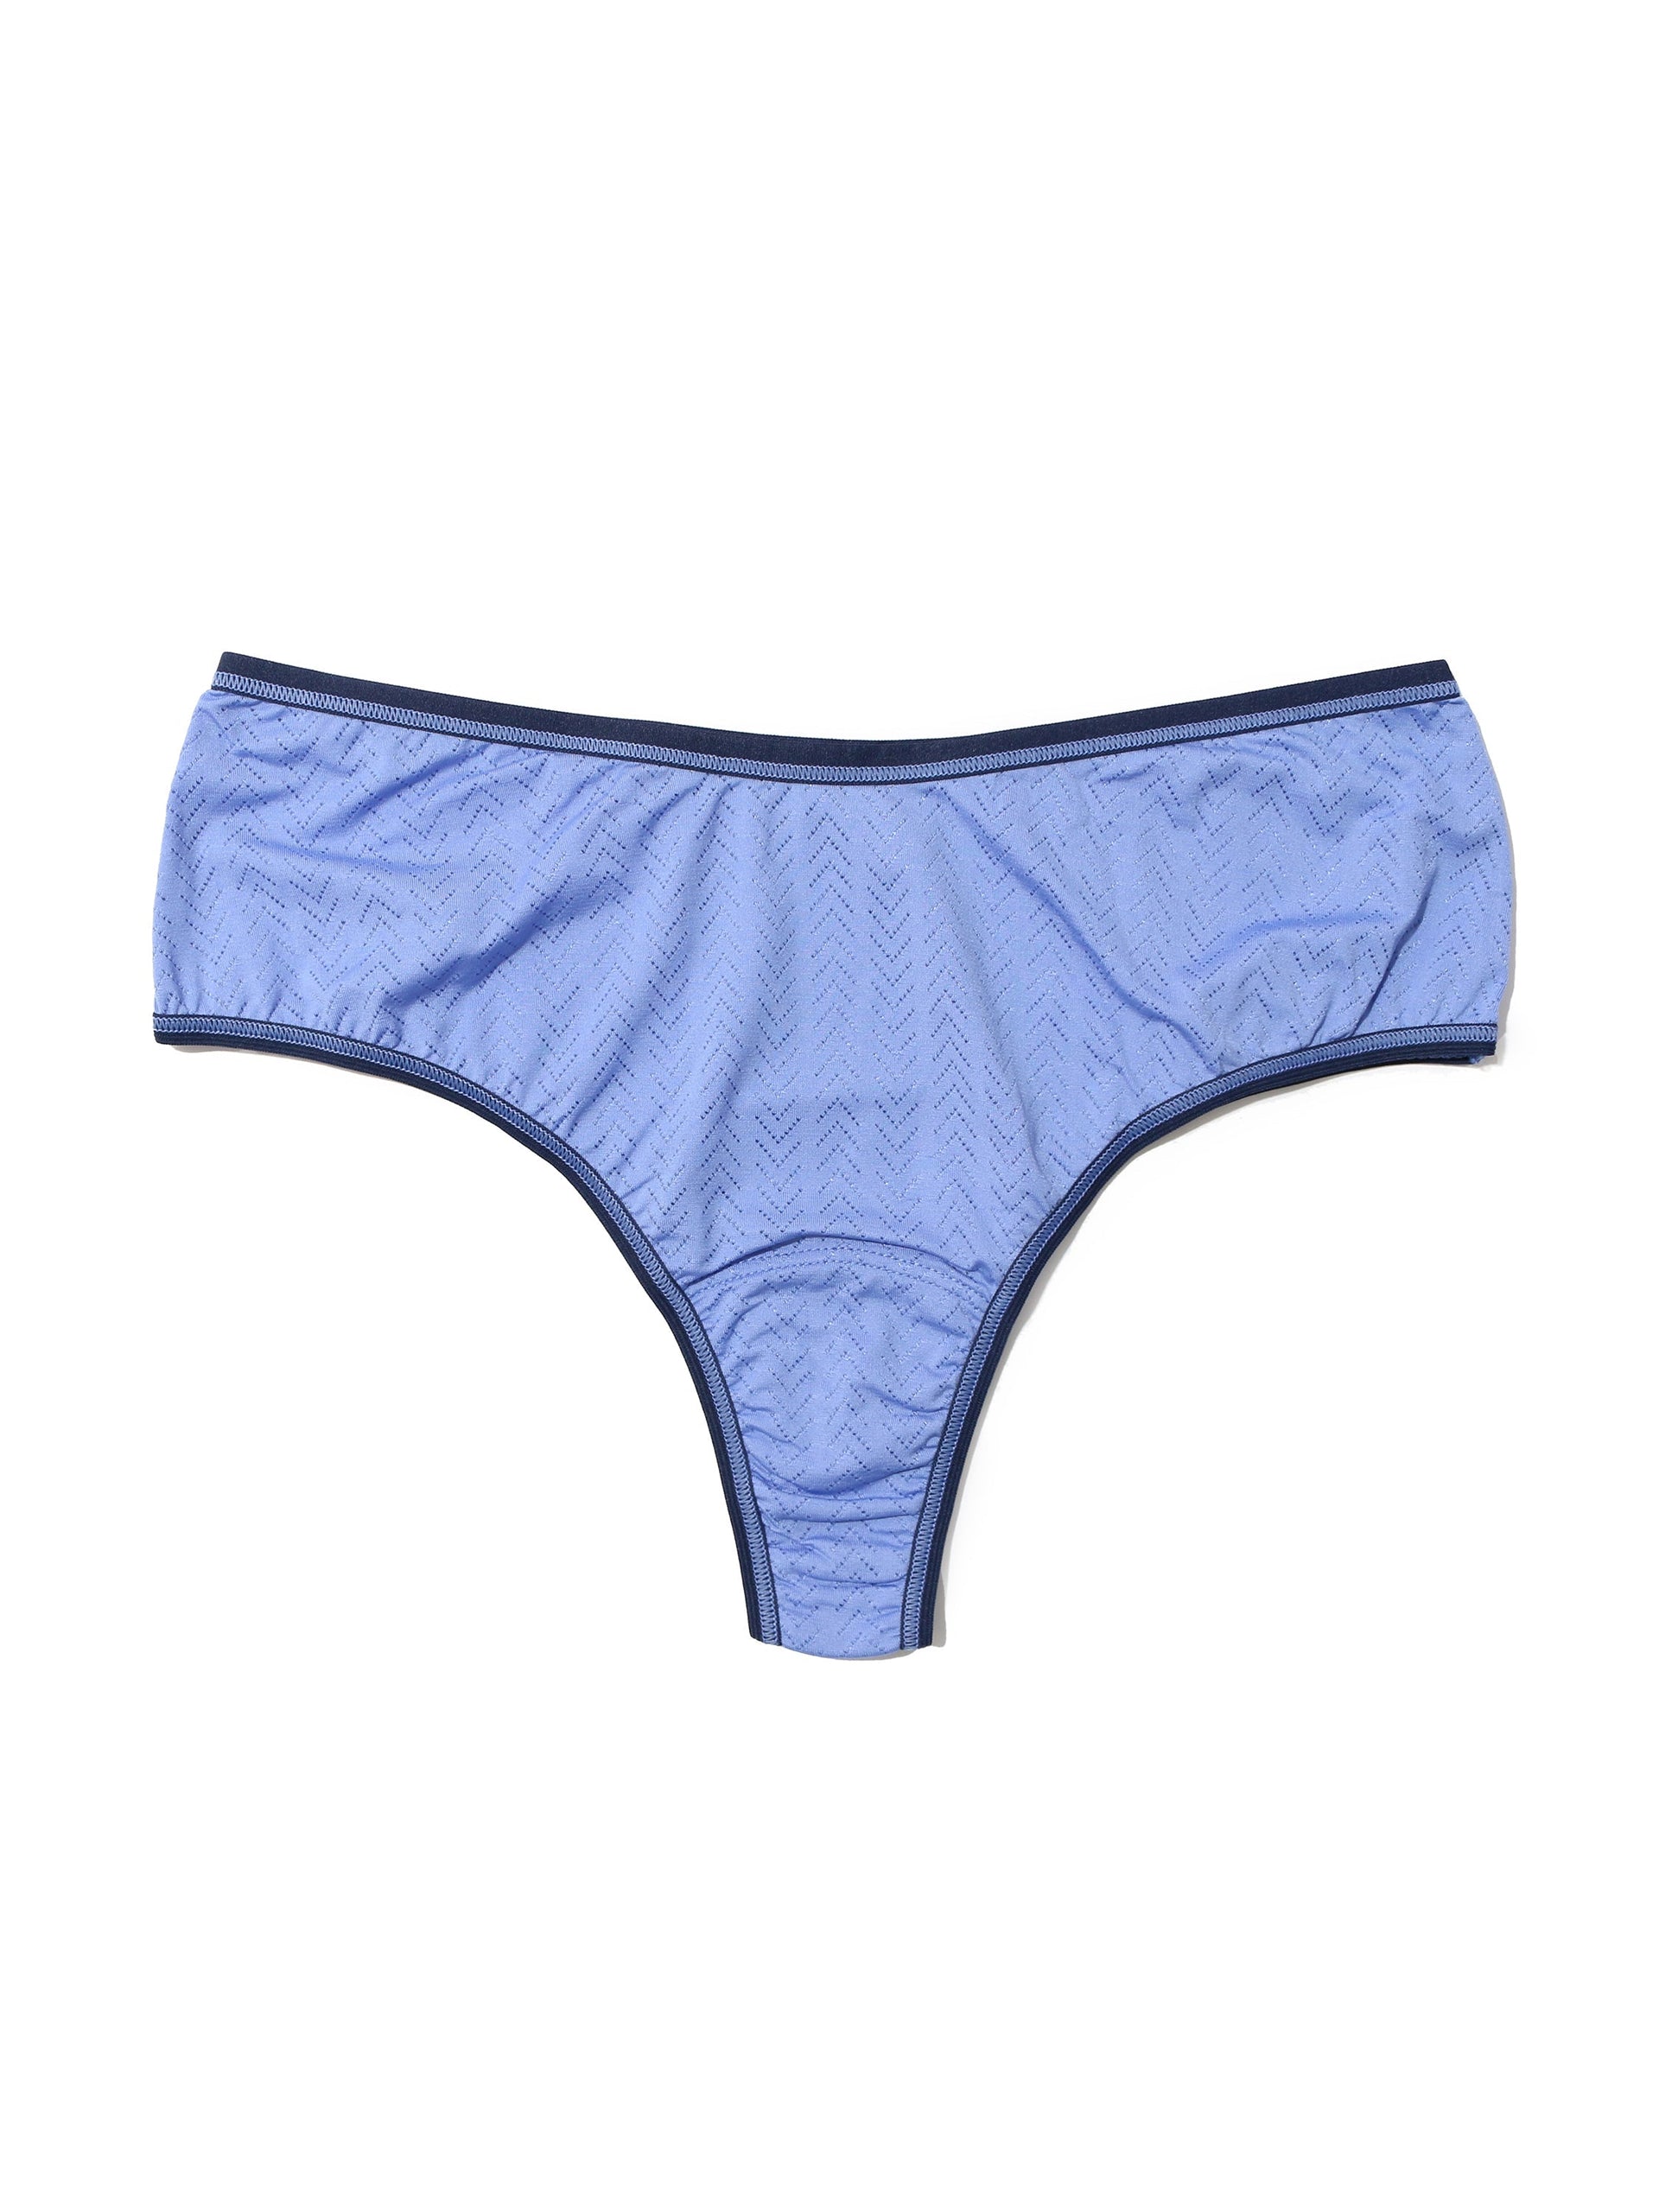 3 for $48 | Mix & Match Underwear | Hanky Panky